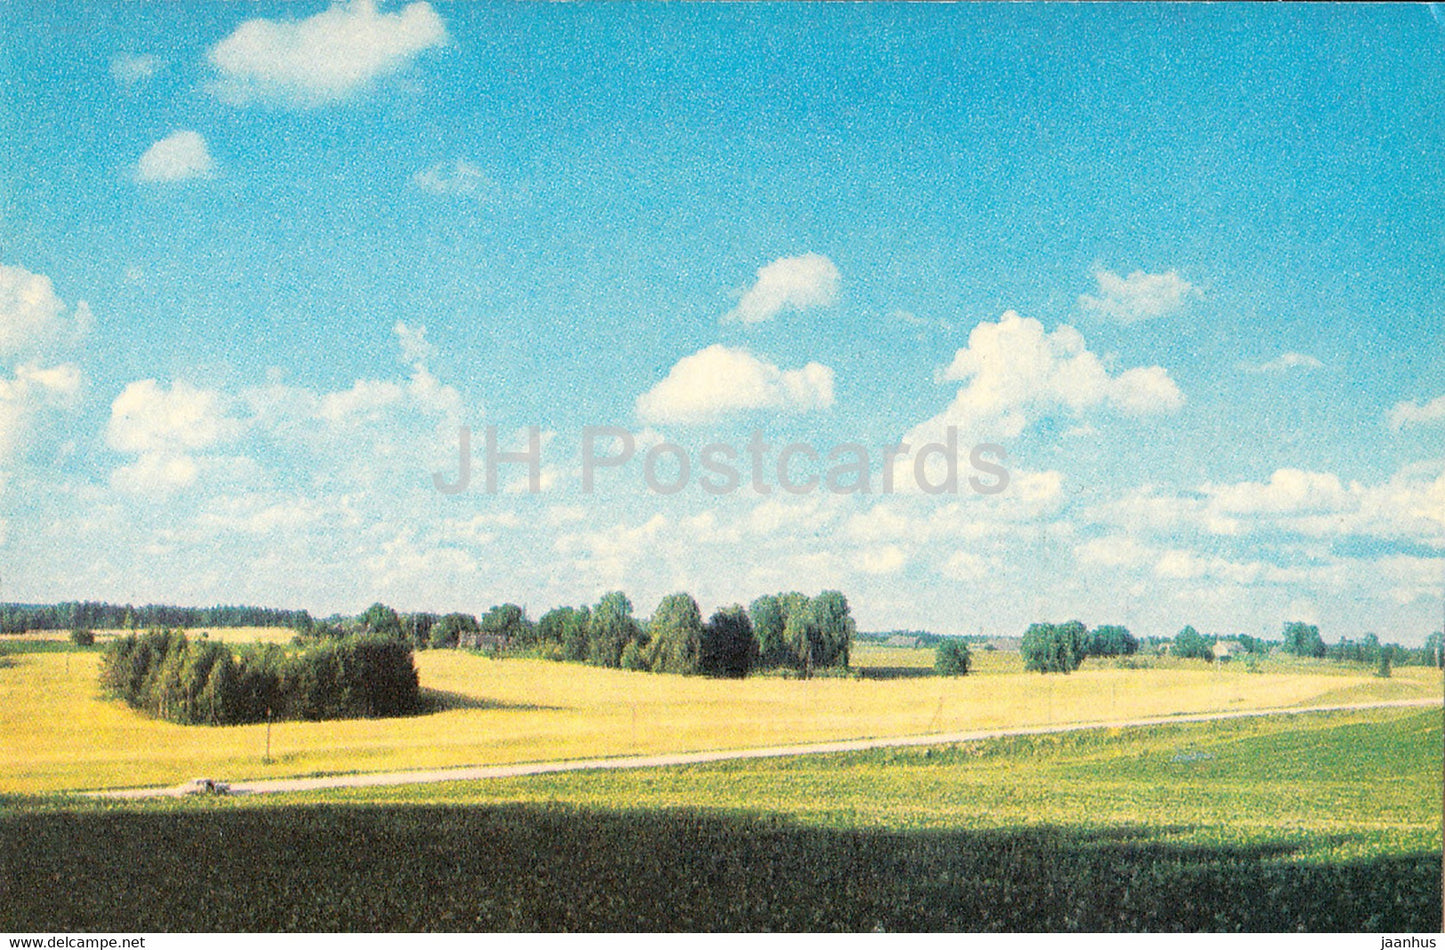 The Gauja National Park - View near Cesu Limbazu Road - 1976 - Latvia USSR - unused - JH Postcards